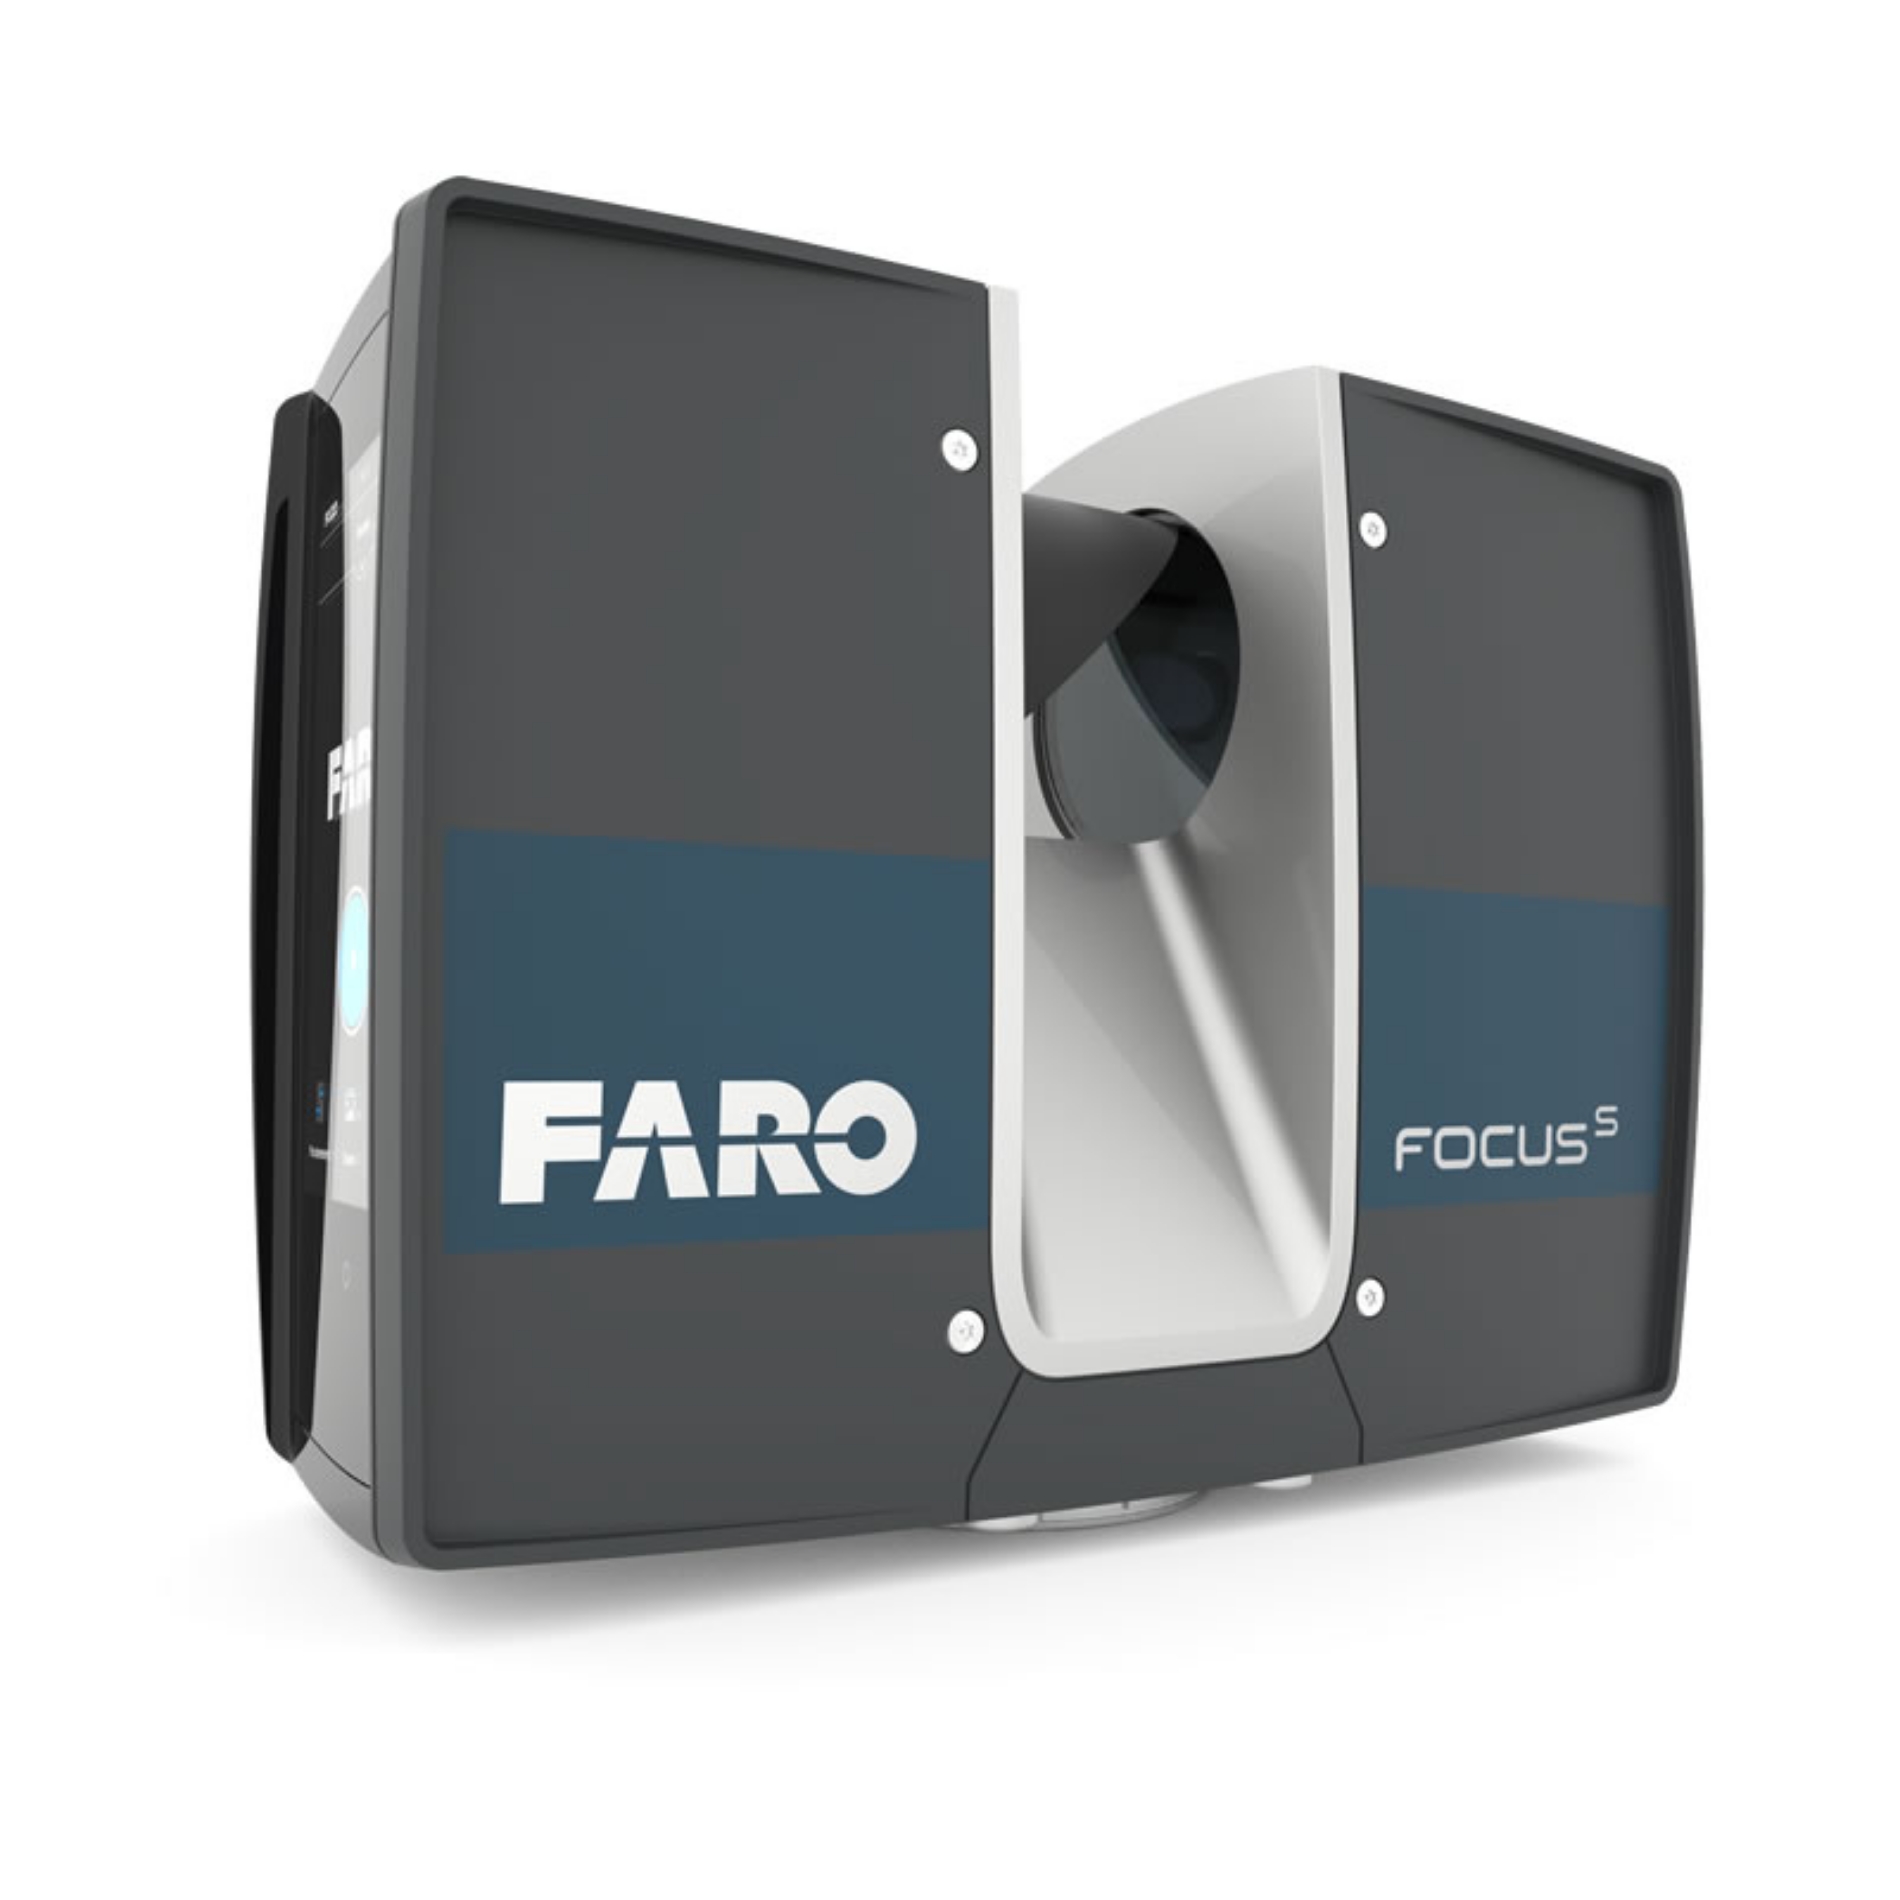 Picture of FARO Focus S 350 Laser Scanner